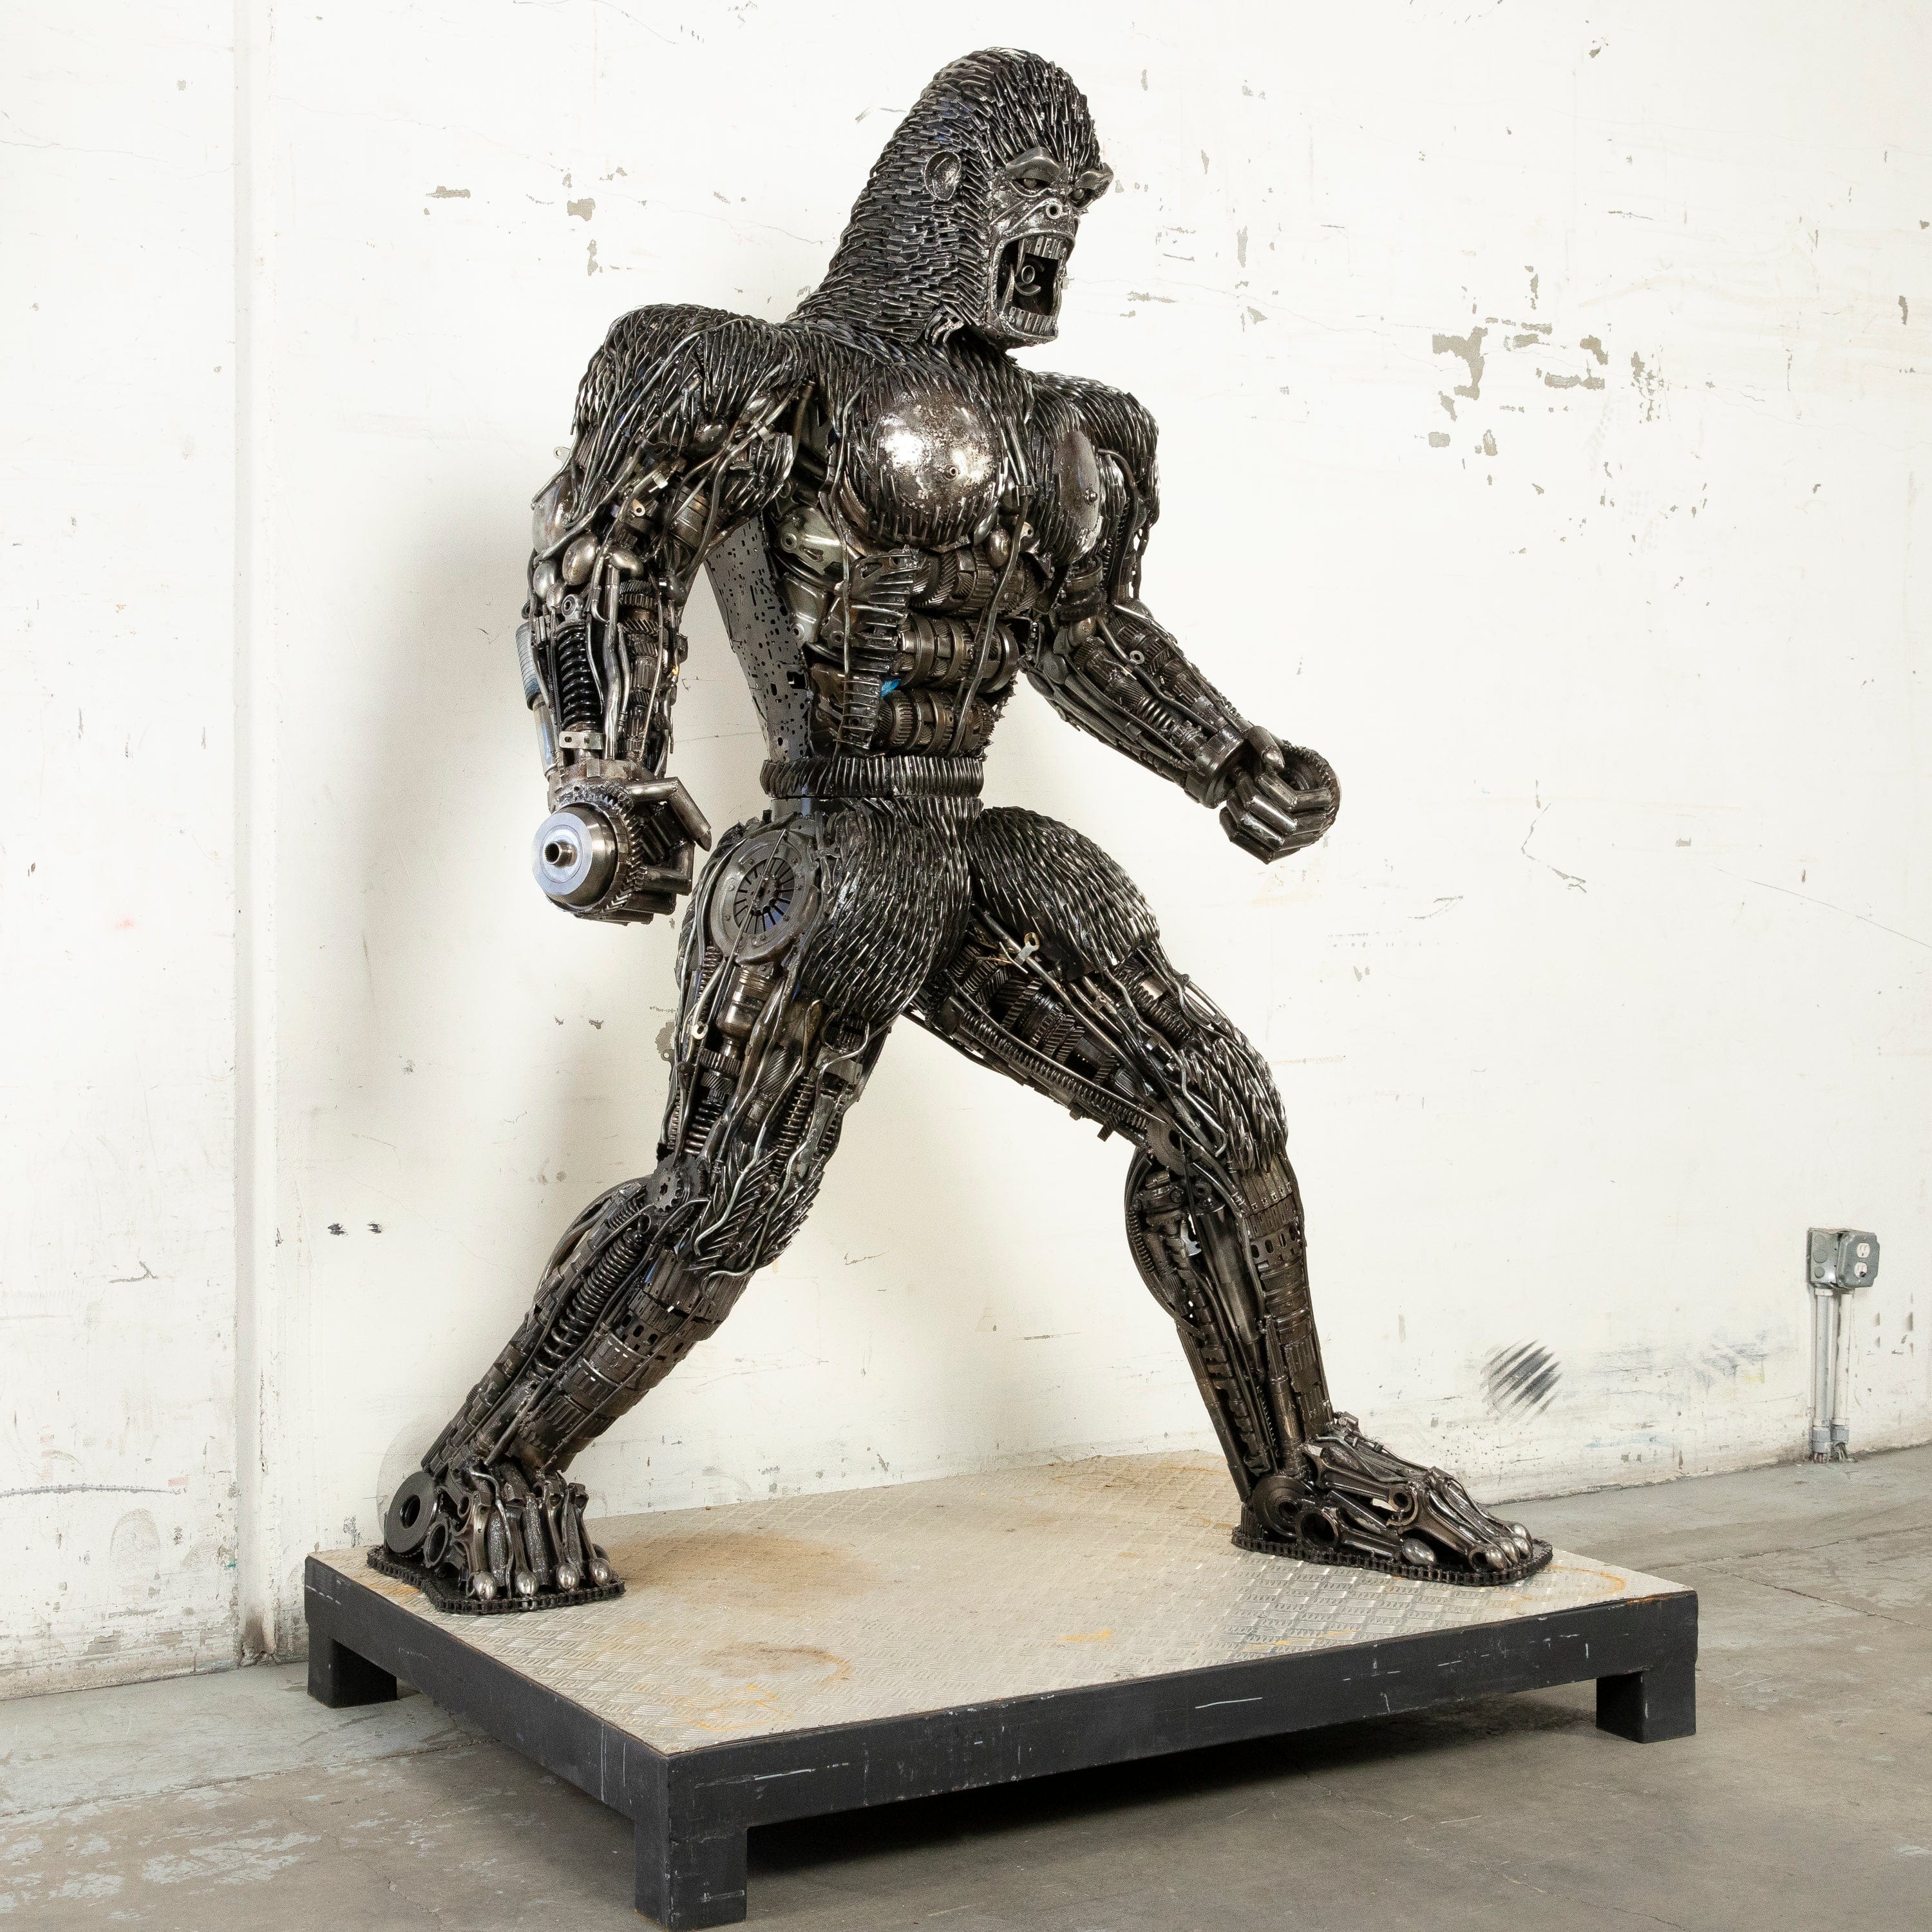 Kalifano Recycled Metal Art 79" King Kong Inspired Recycled Metal Art Sculpture RMS-KKONG200-S01